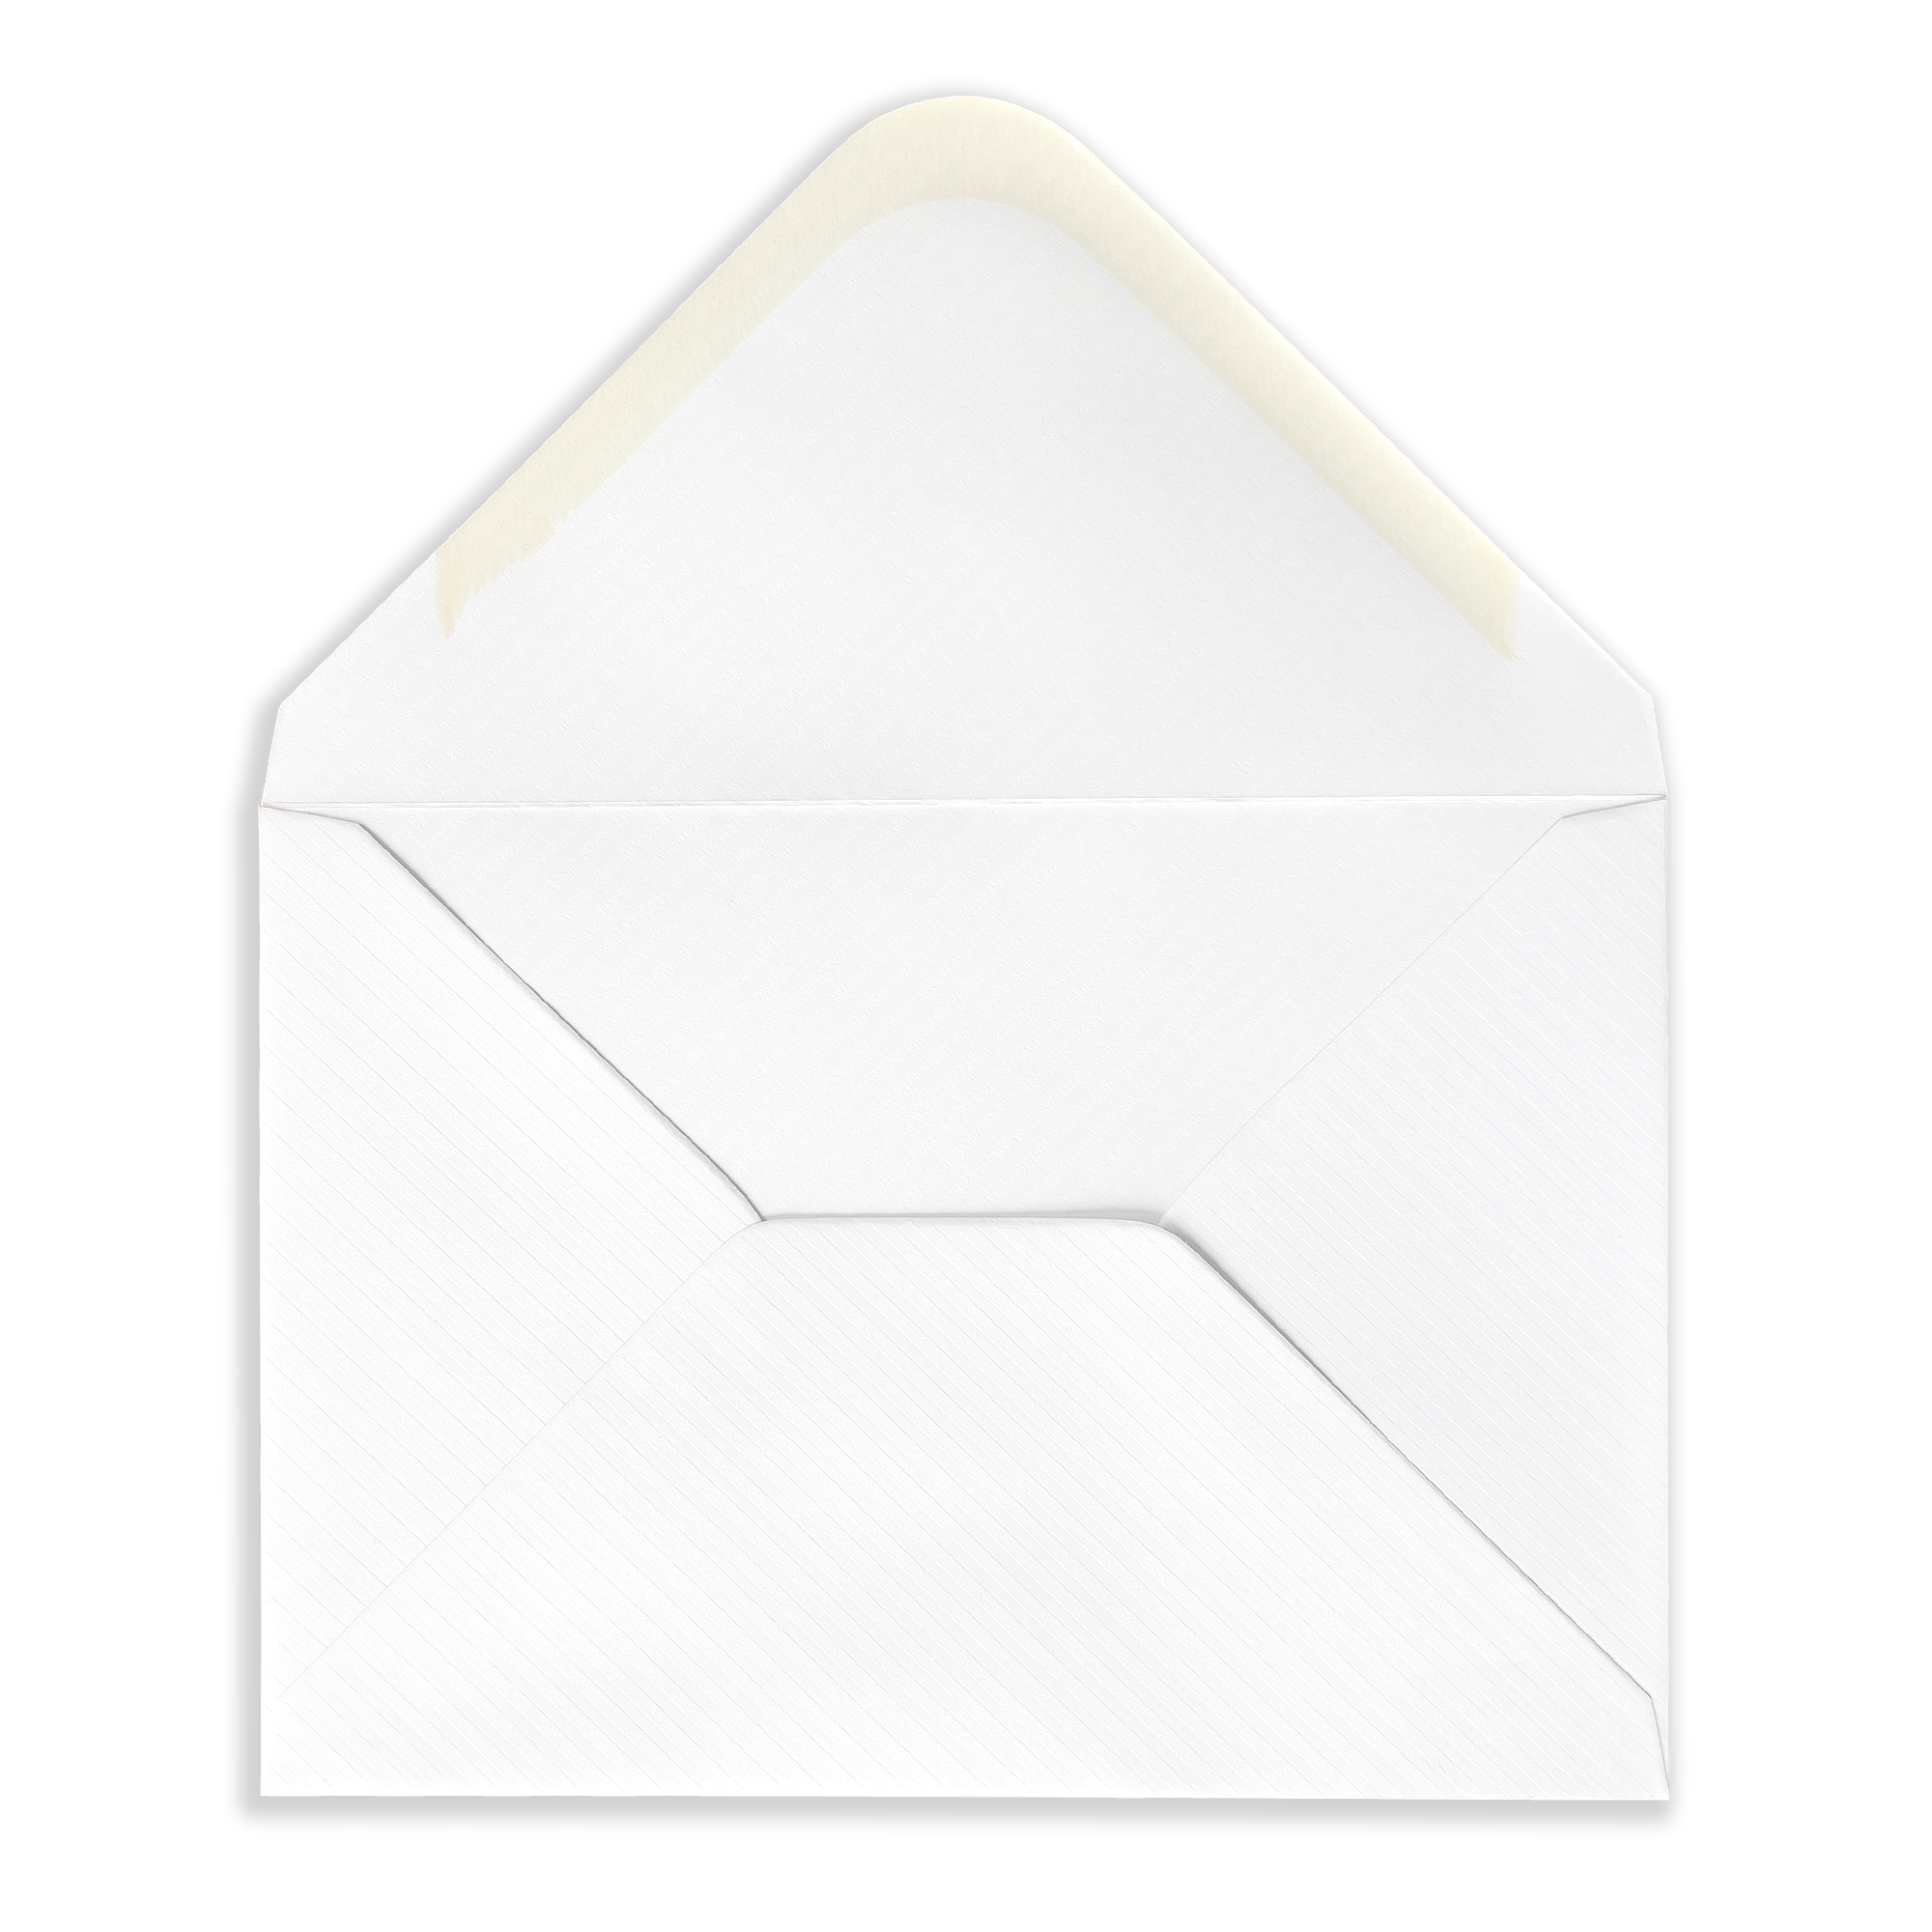 c6-white-ribbed-envelopes-flap-open